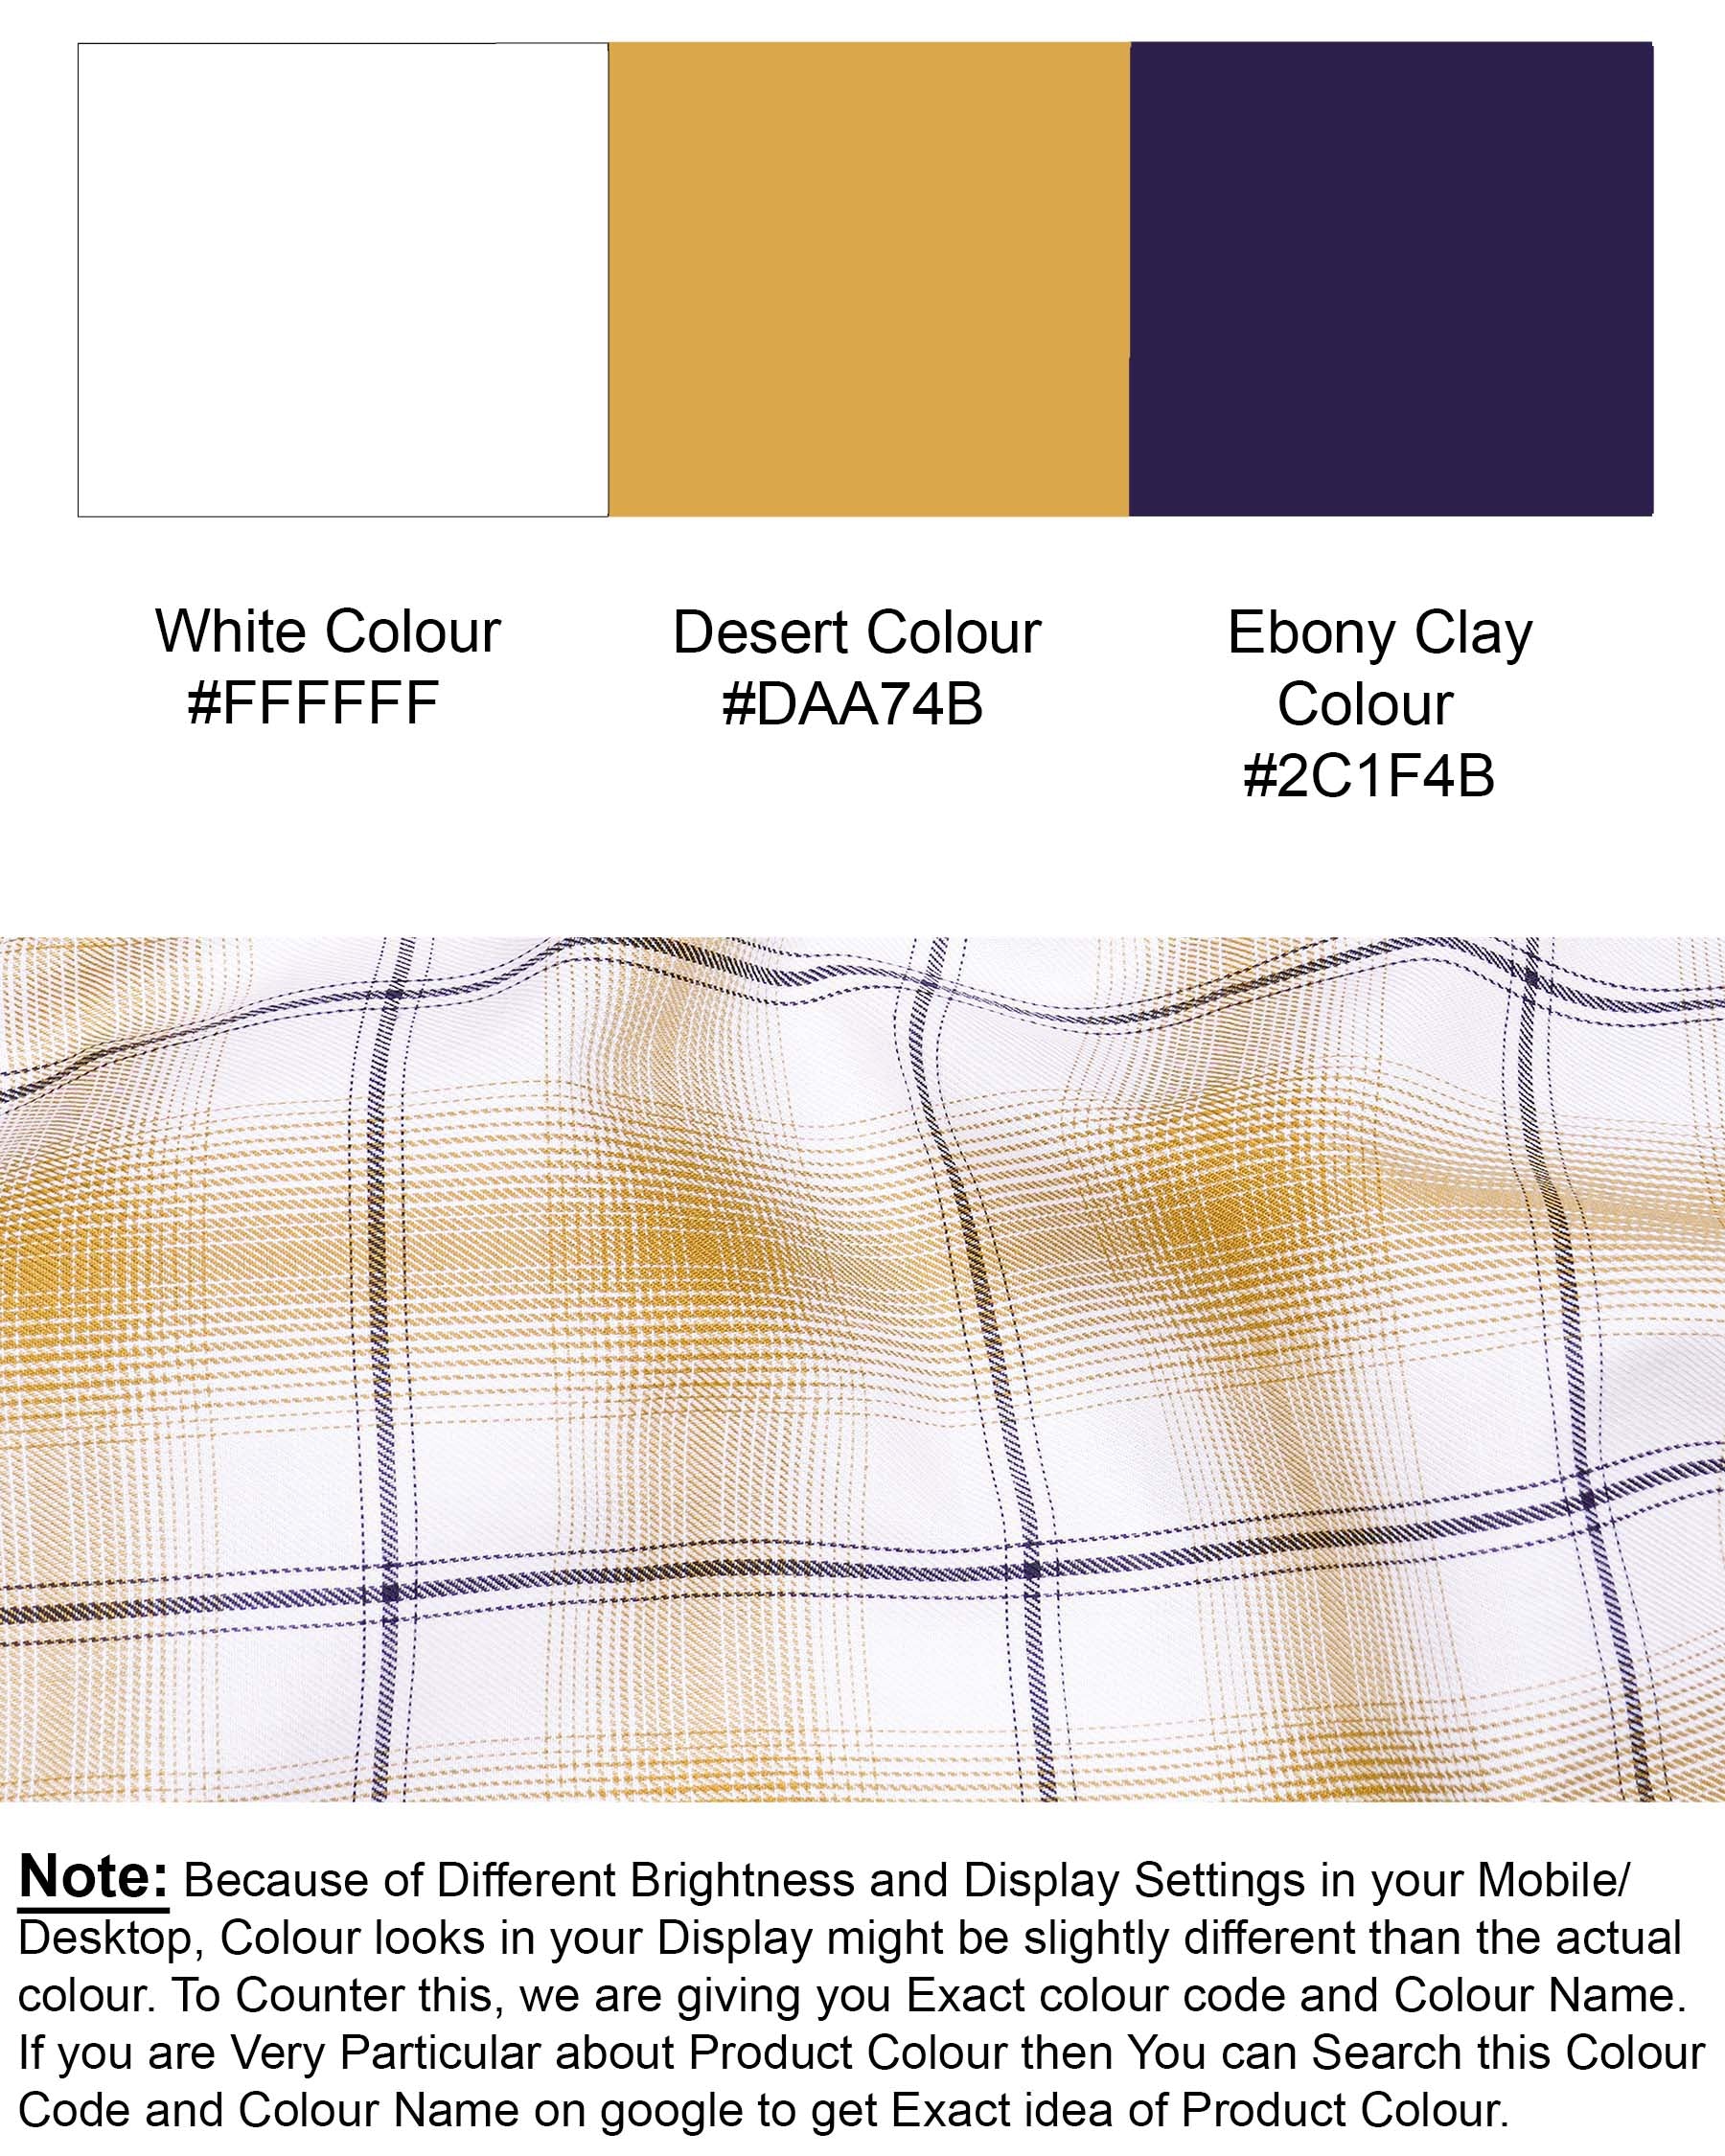 Desert Brown and White Twill Windowpane Premium Cotton Shirt  7513-BLK-38, 7513-BLK-H-38, 7513-BLK-39, 7513-BLK-H-39, 7513-BLK-40, 7513-BLK-H-40, 7513-BLK-42, 7513-BLK-H-42, 7513-BLK-44, 7513-BLK-H-44, 7513-BLK-46, 7513-BLK-H-46, 7513-BLK-48, 7513-BLK-H-48, 7513-BLK-50, 7513-BLK-H-50, 7513-BLK-52, 7513-BLK-H-52